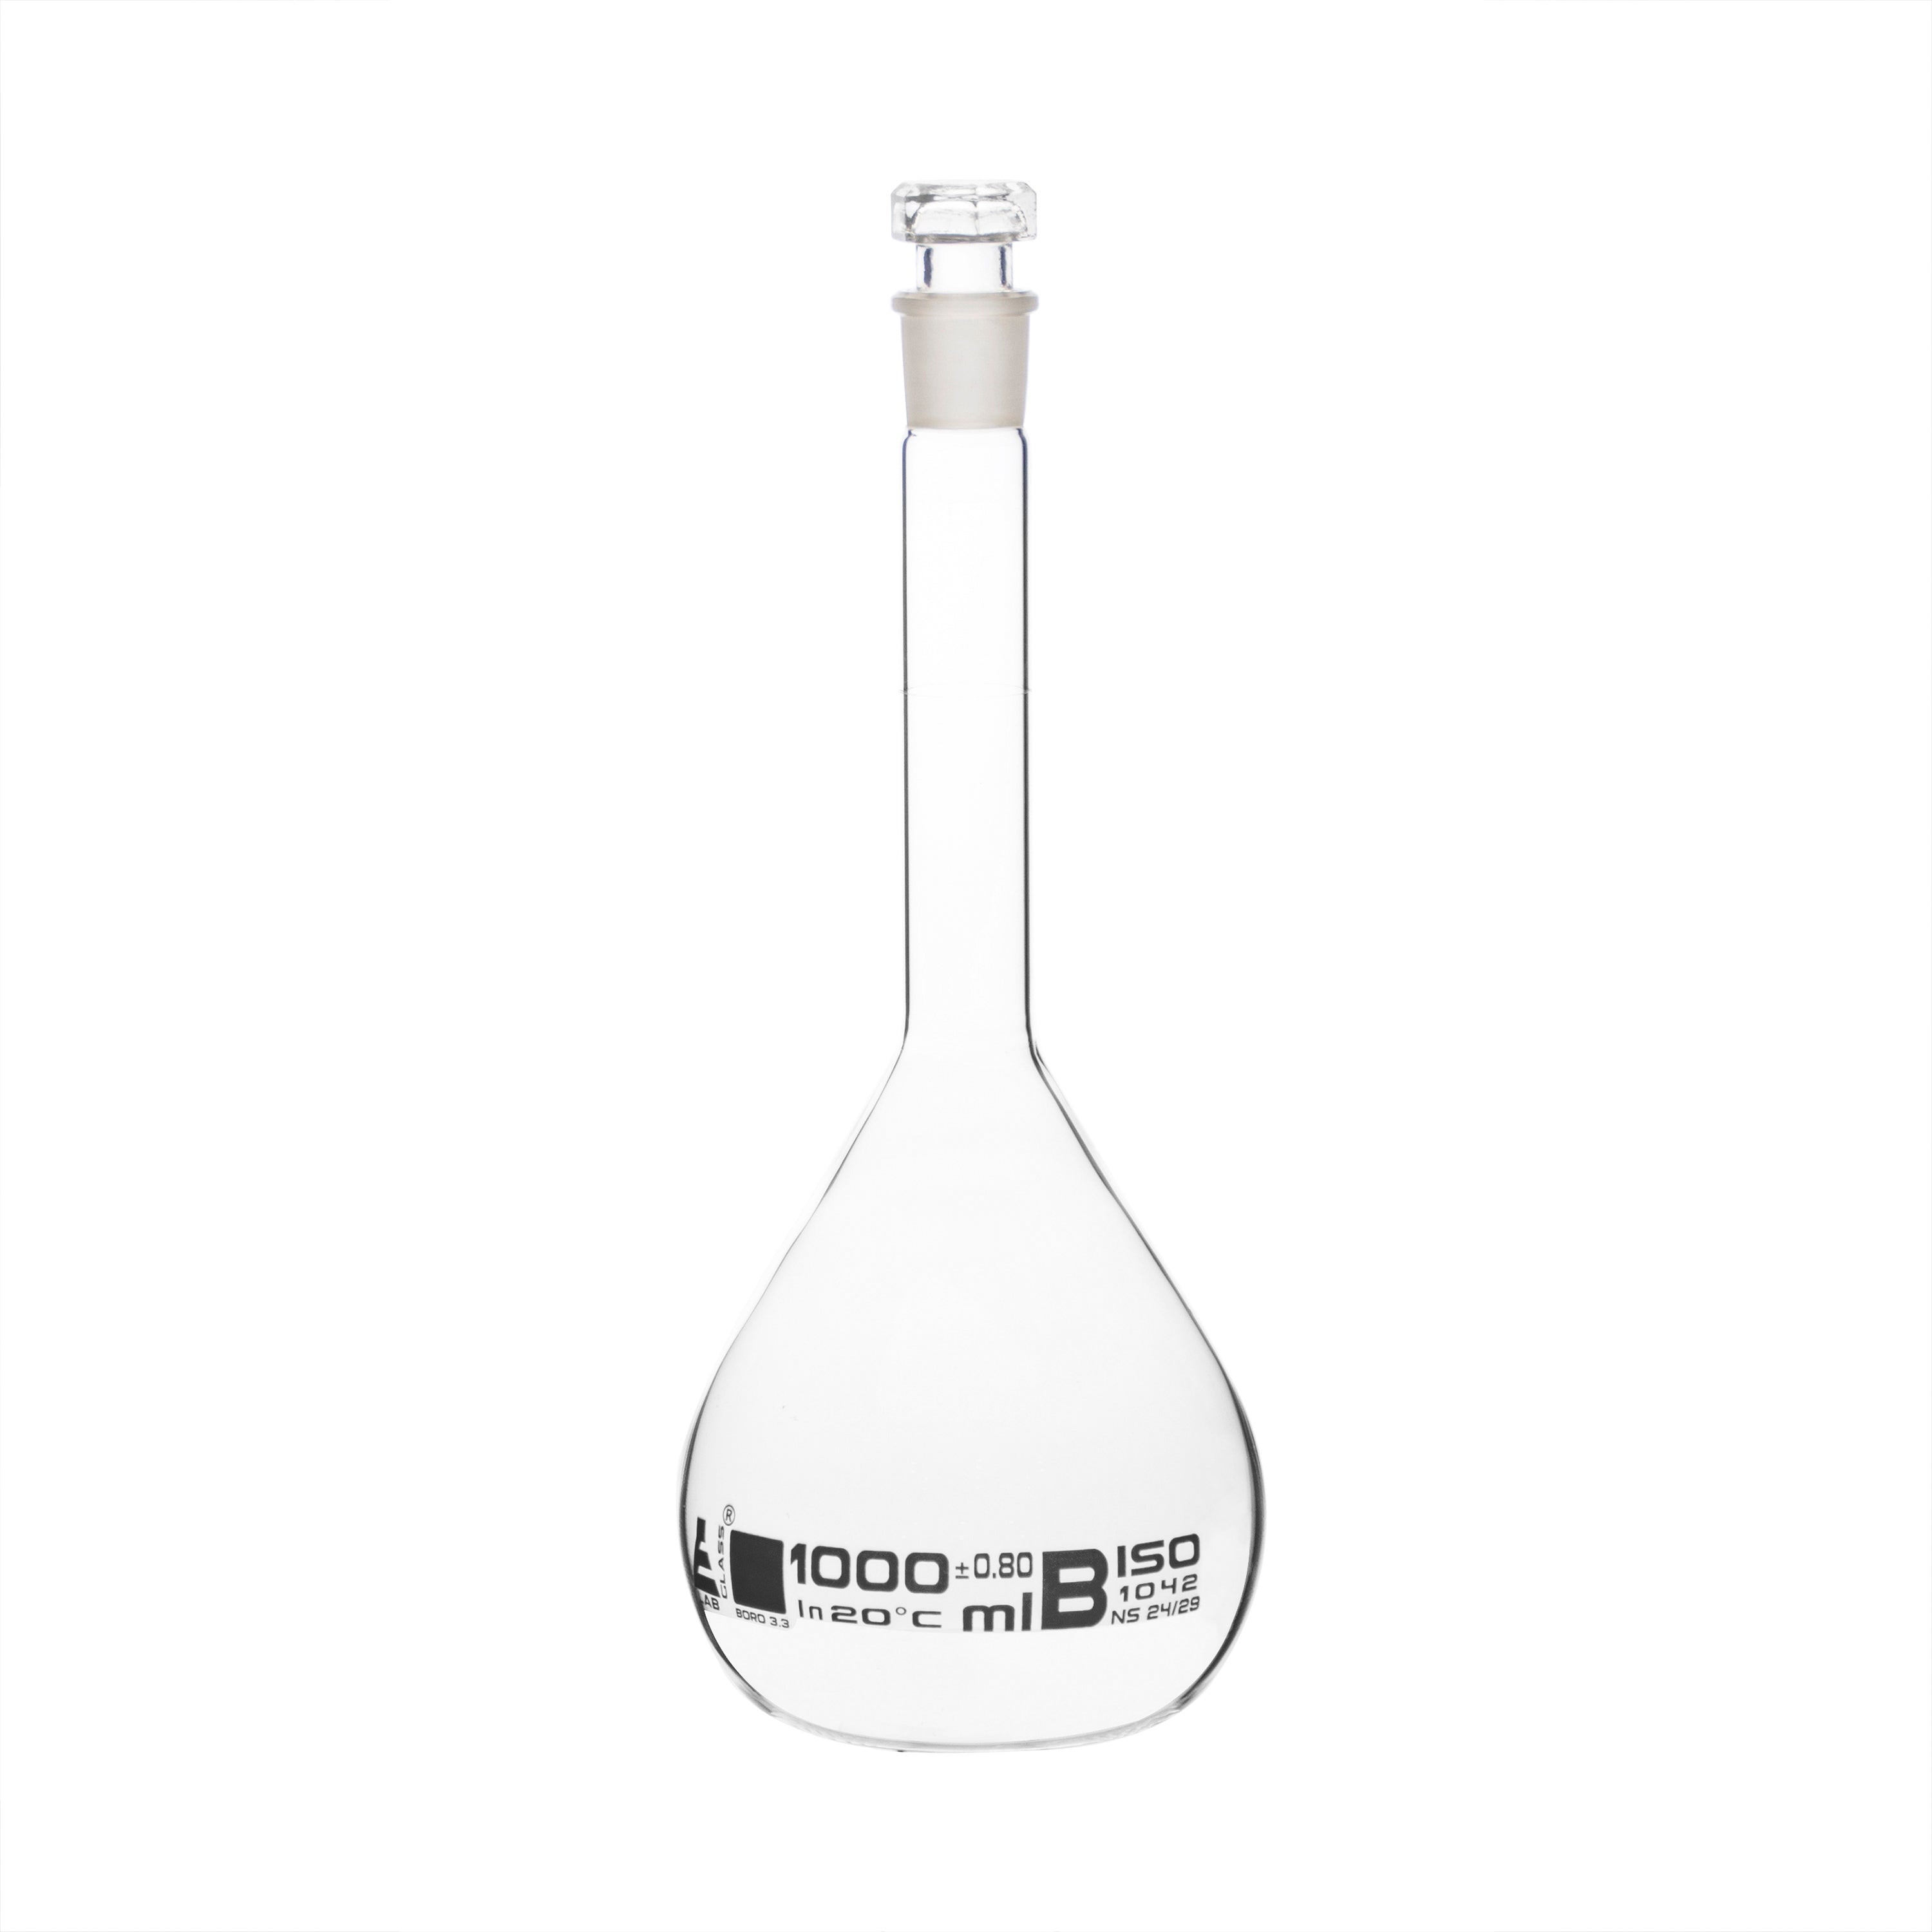 Borosilicate Volumetric Flask with Hollow Glass Stopper, 1000ml, Class B, White Print, Autoclavable